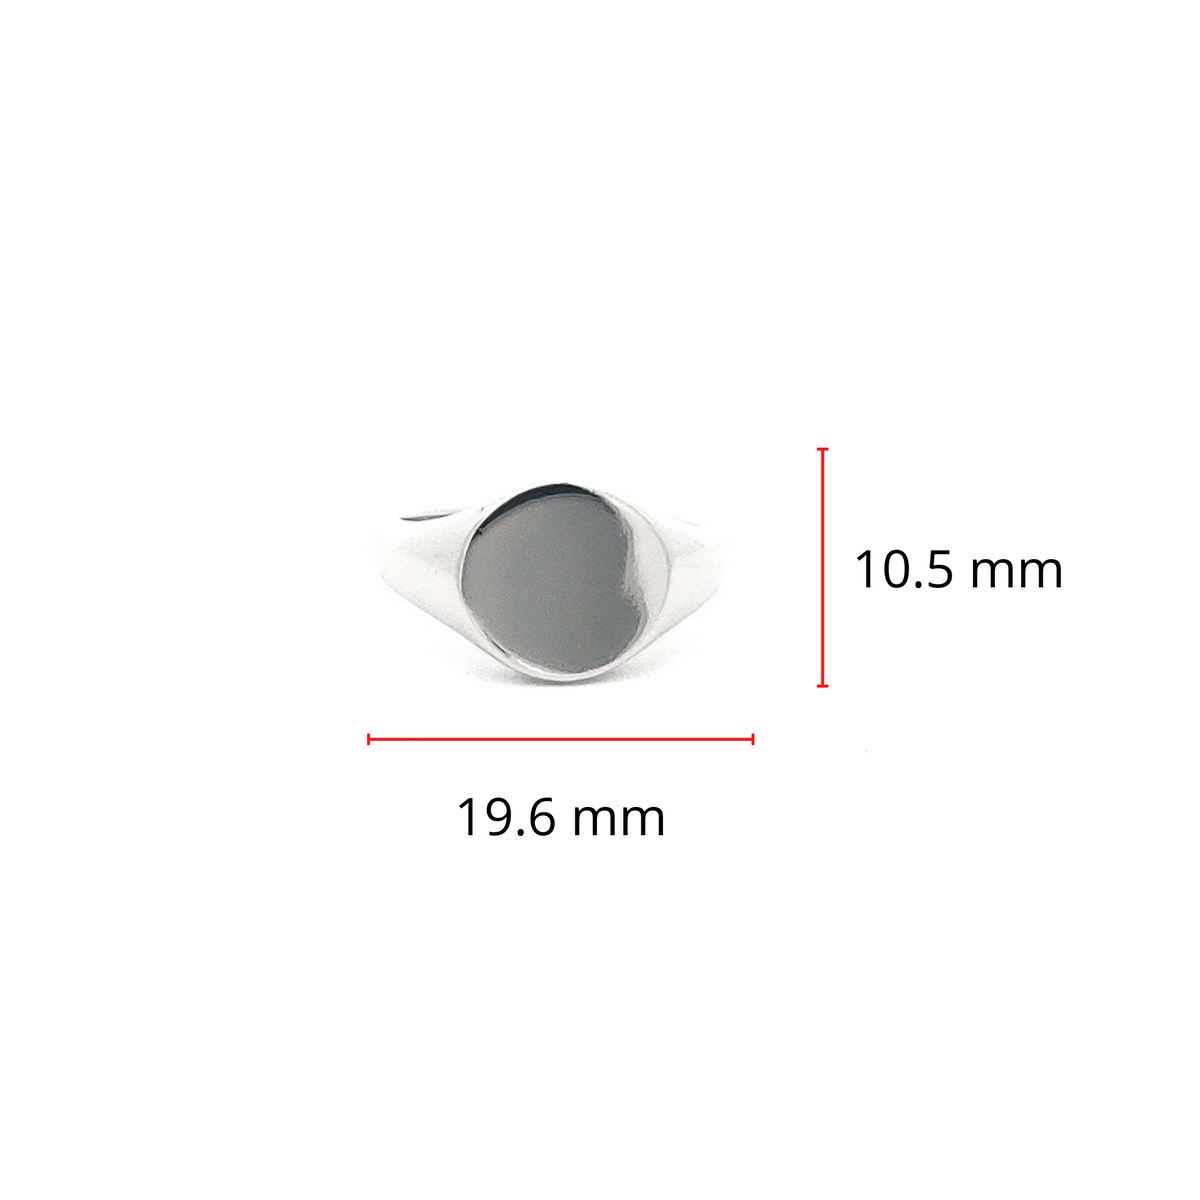 Silver 925 High Polish Engravable Ring